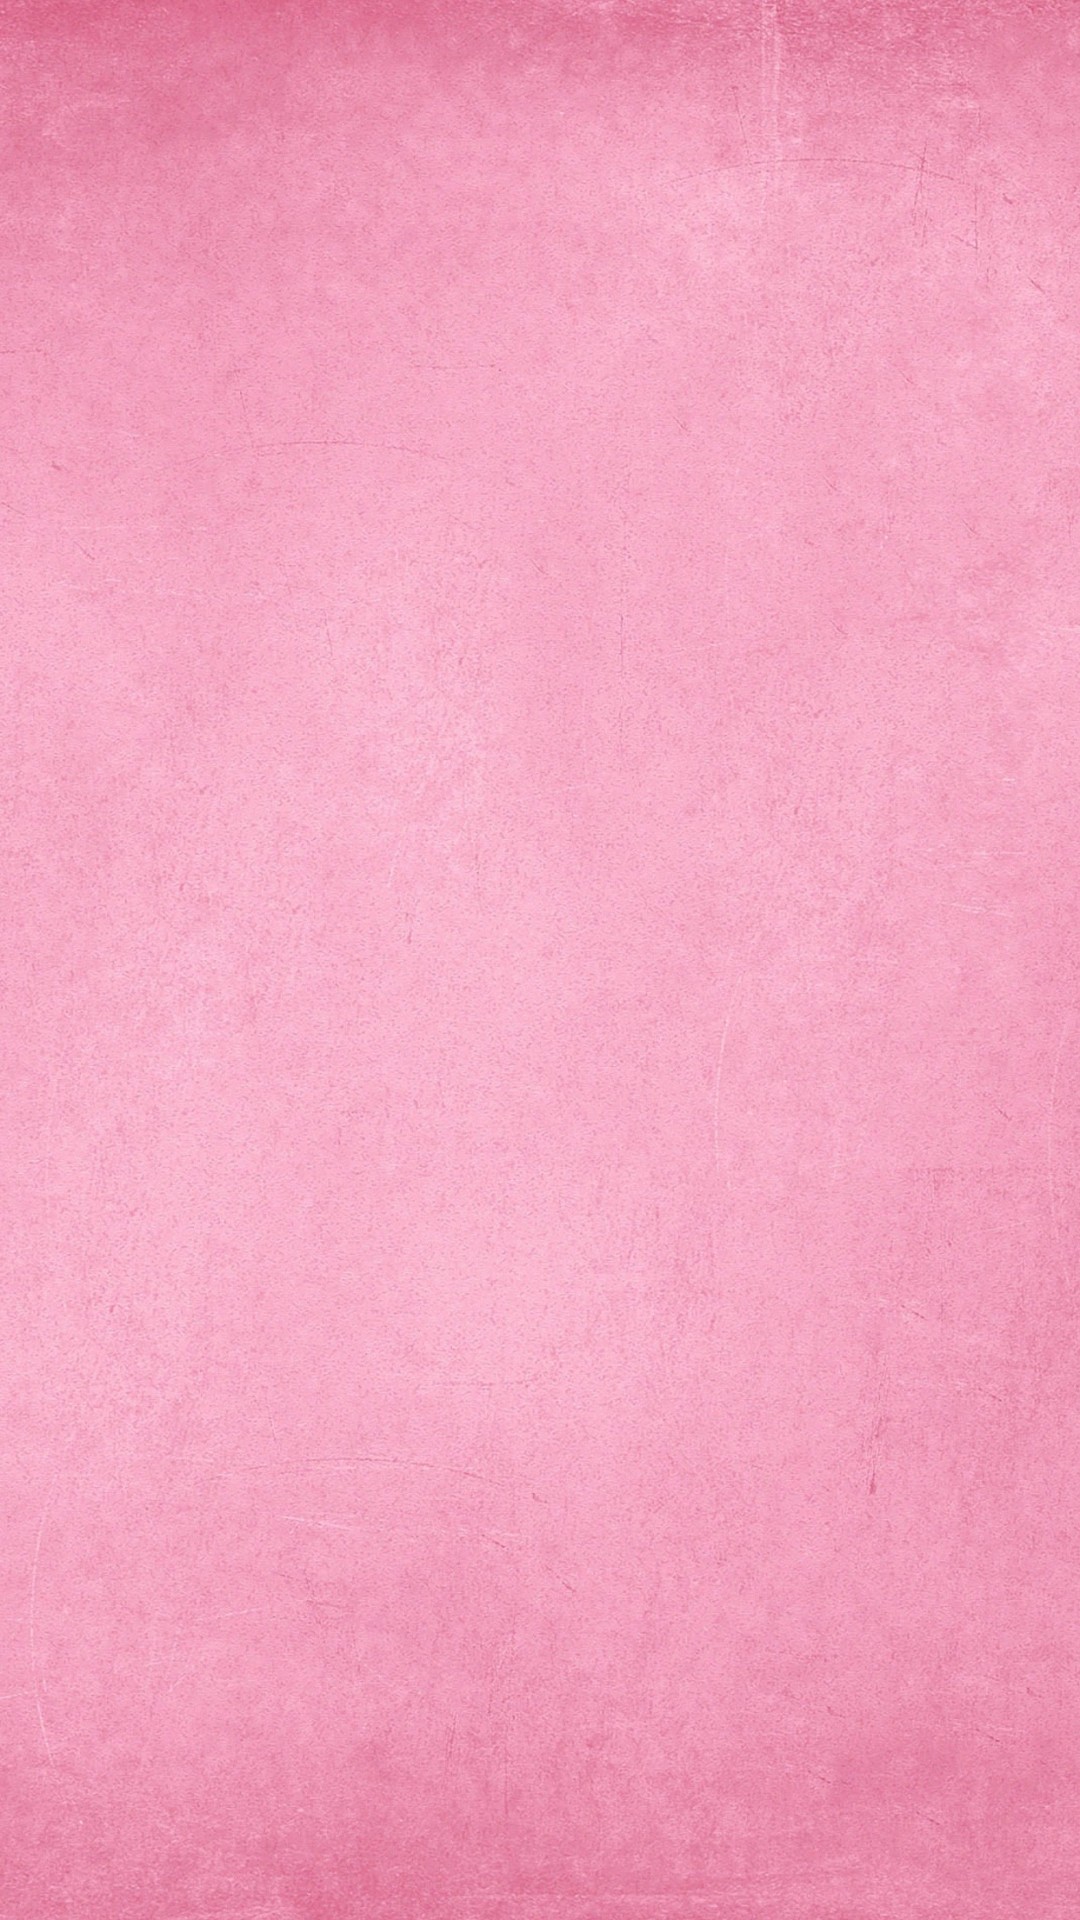 Pink Leather Background‏ - بحث Google‏  Pink wallpaper iphone, Pink  wallpaper, Iphone wallpaper vintage